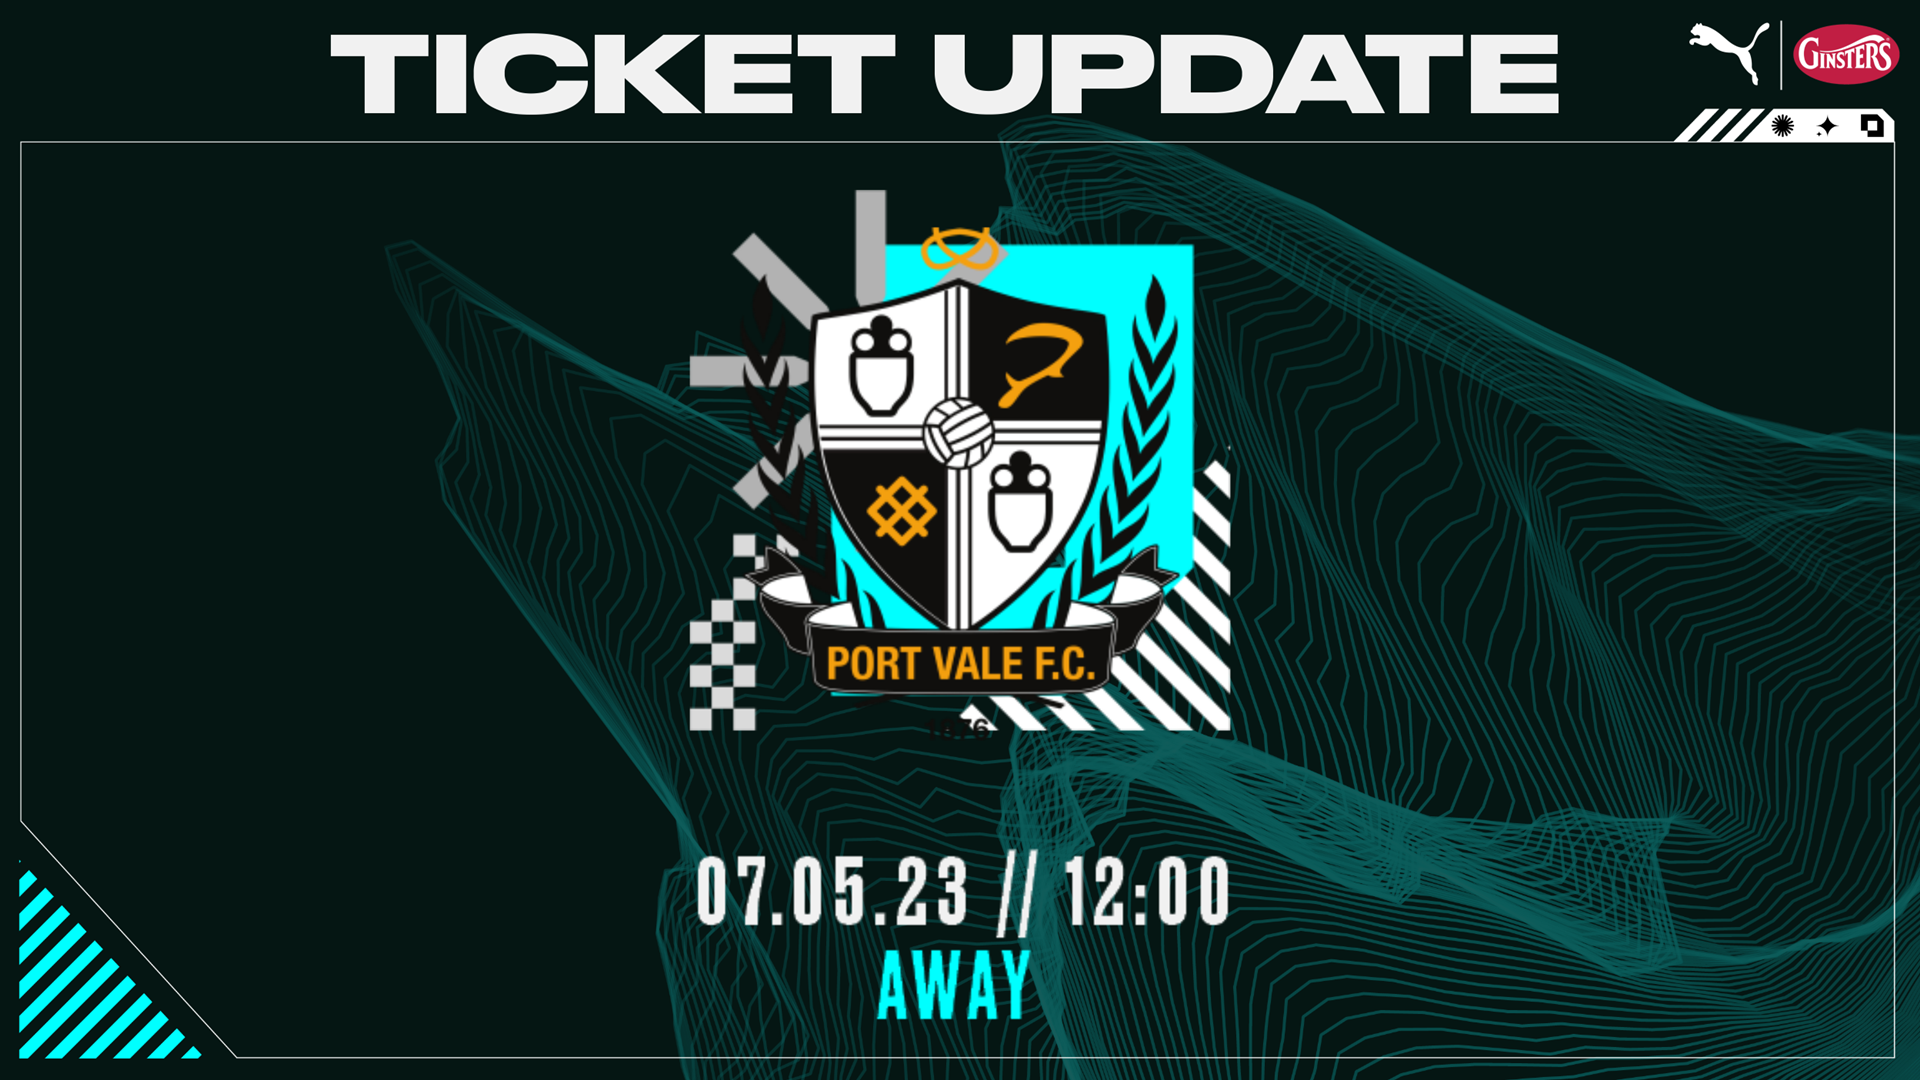 Port Vale Ticket Update